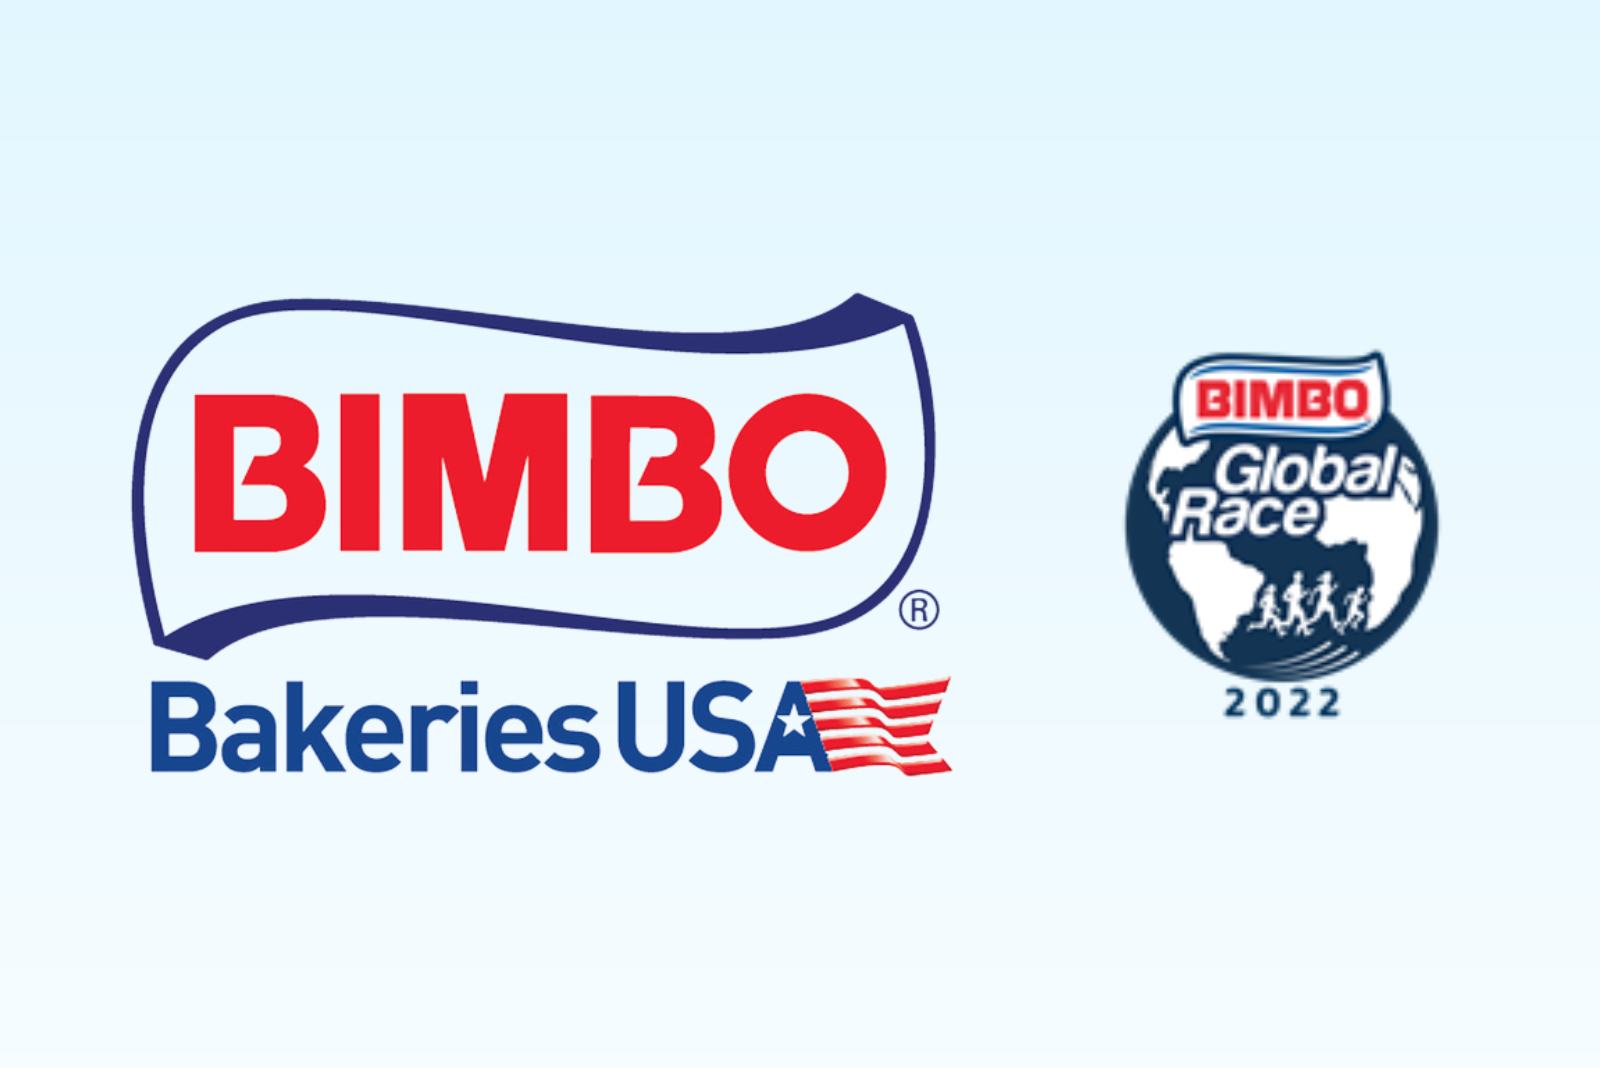 Union eye global recognition with Bimbo sponsorship